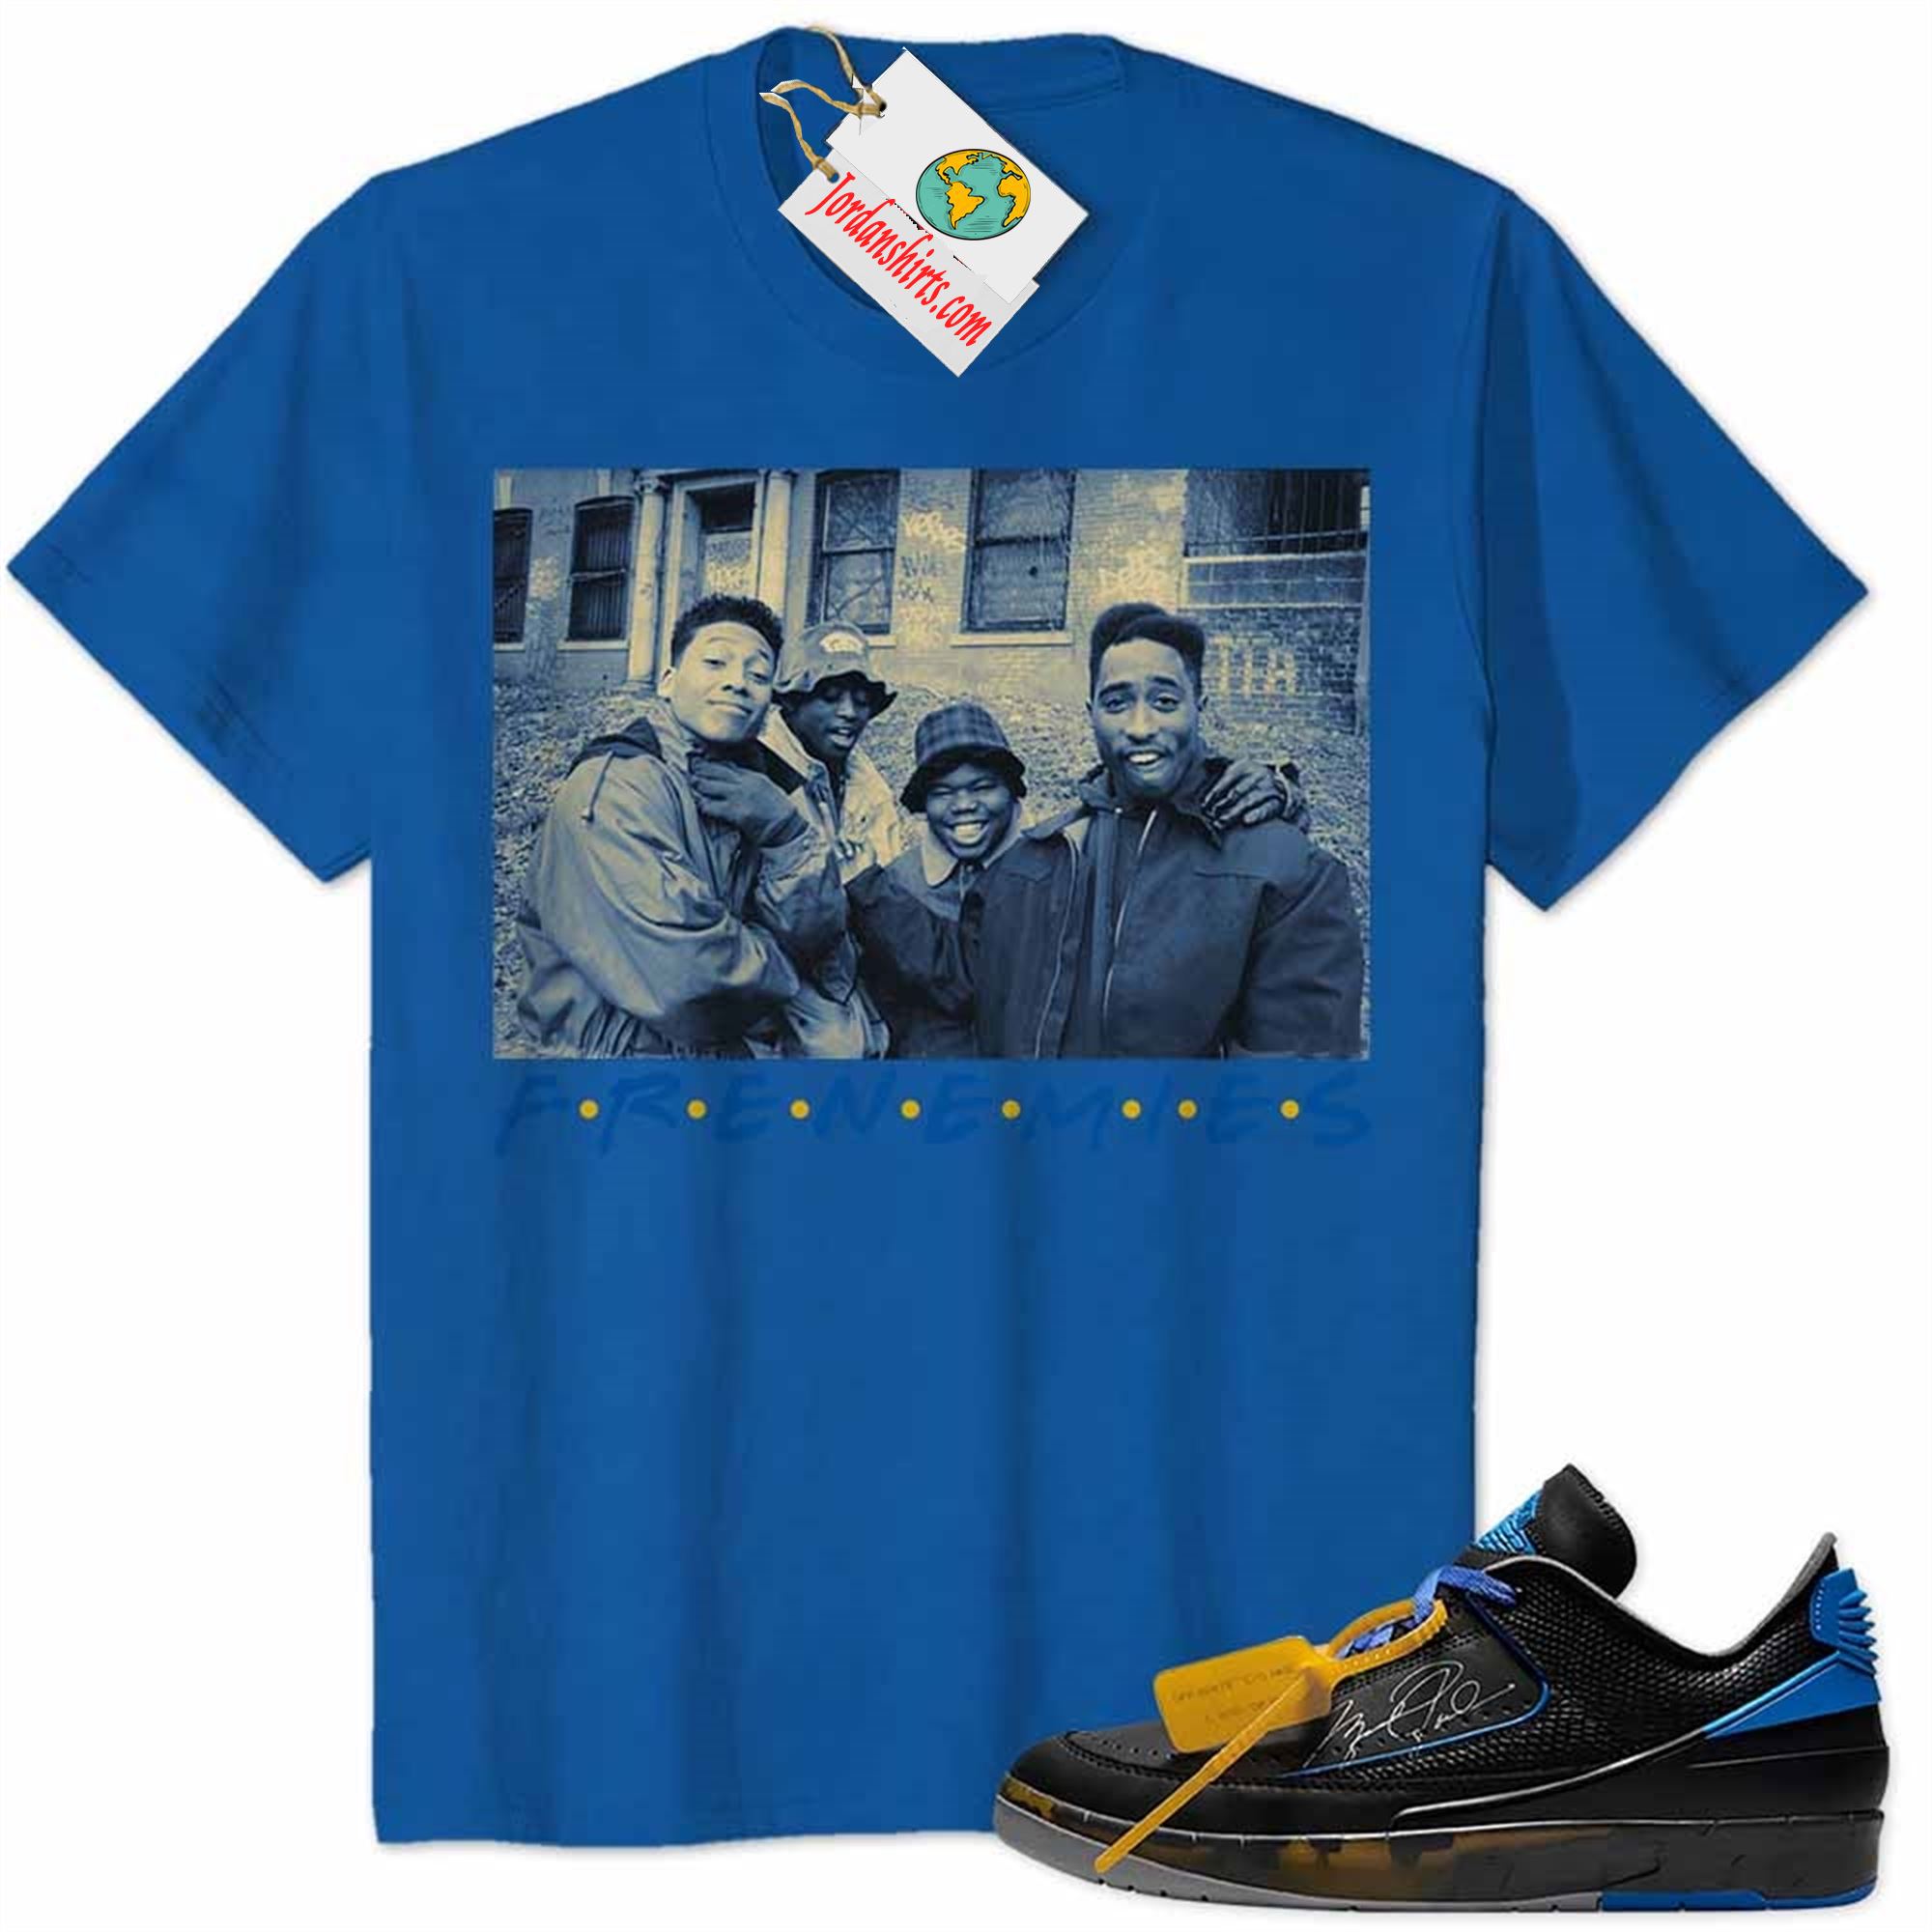 Jordan 2 Shirt, Tupac Juice Friends Vintage 90s Rap Hip Hop Blue Air Jordan 2 Low X Off-white Black And Varsity Royal 2s Full Size Up To 5xl